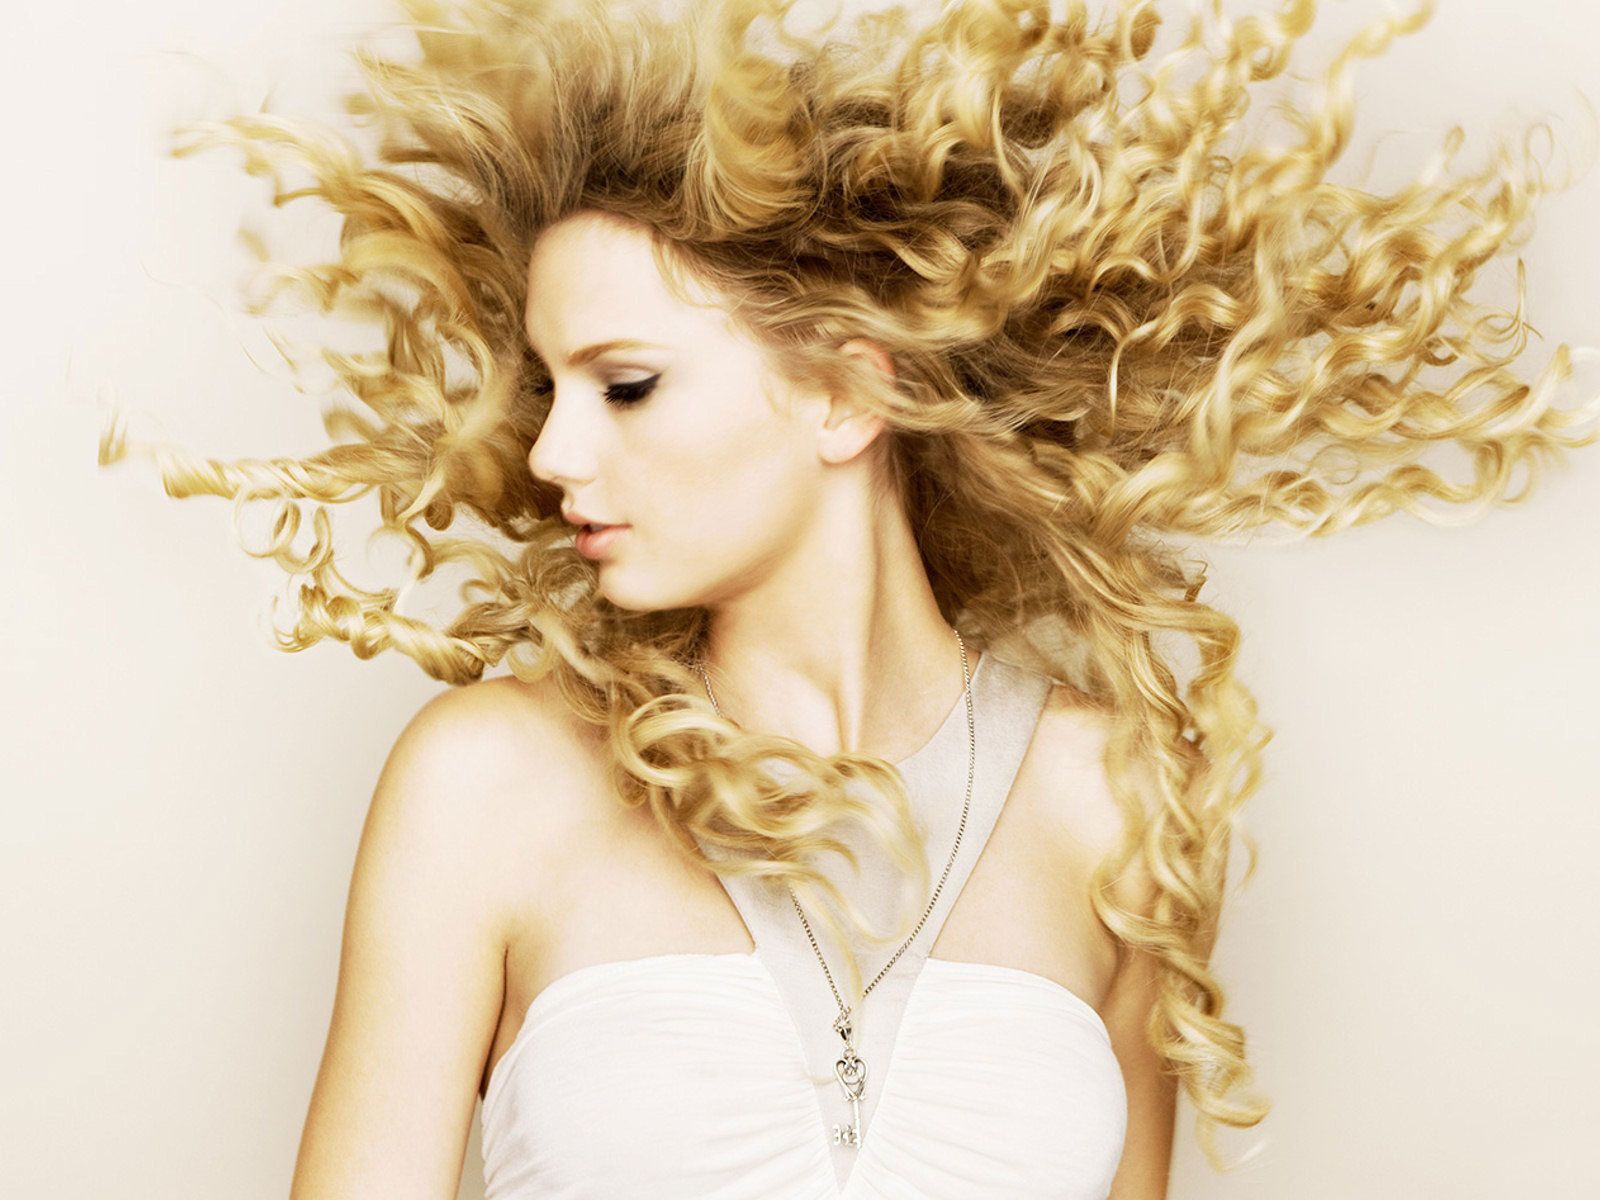 Fearless (Taylor Swift album) Wallpaper